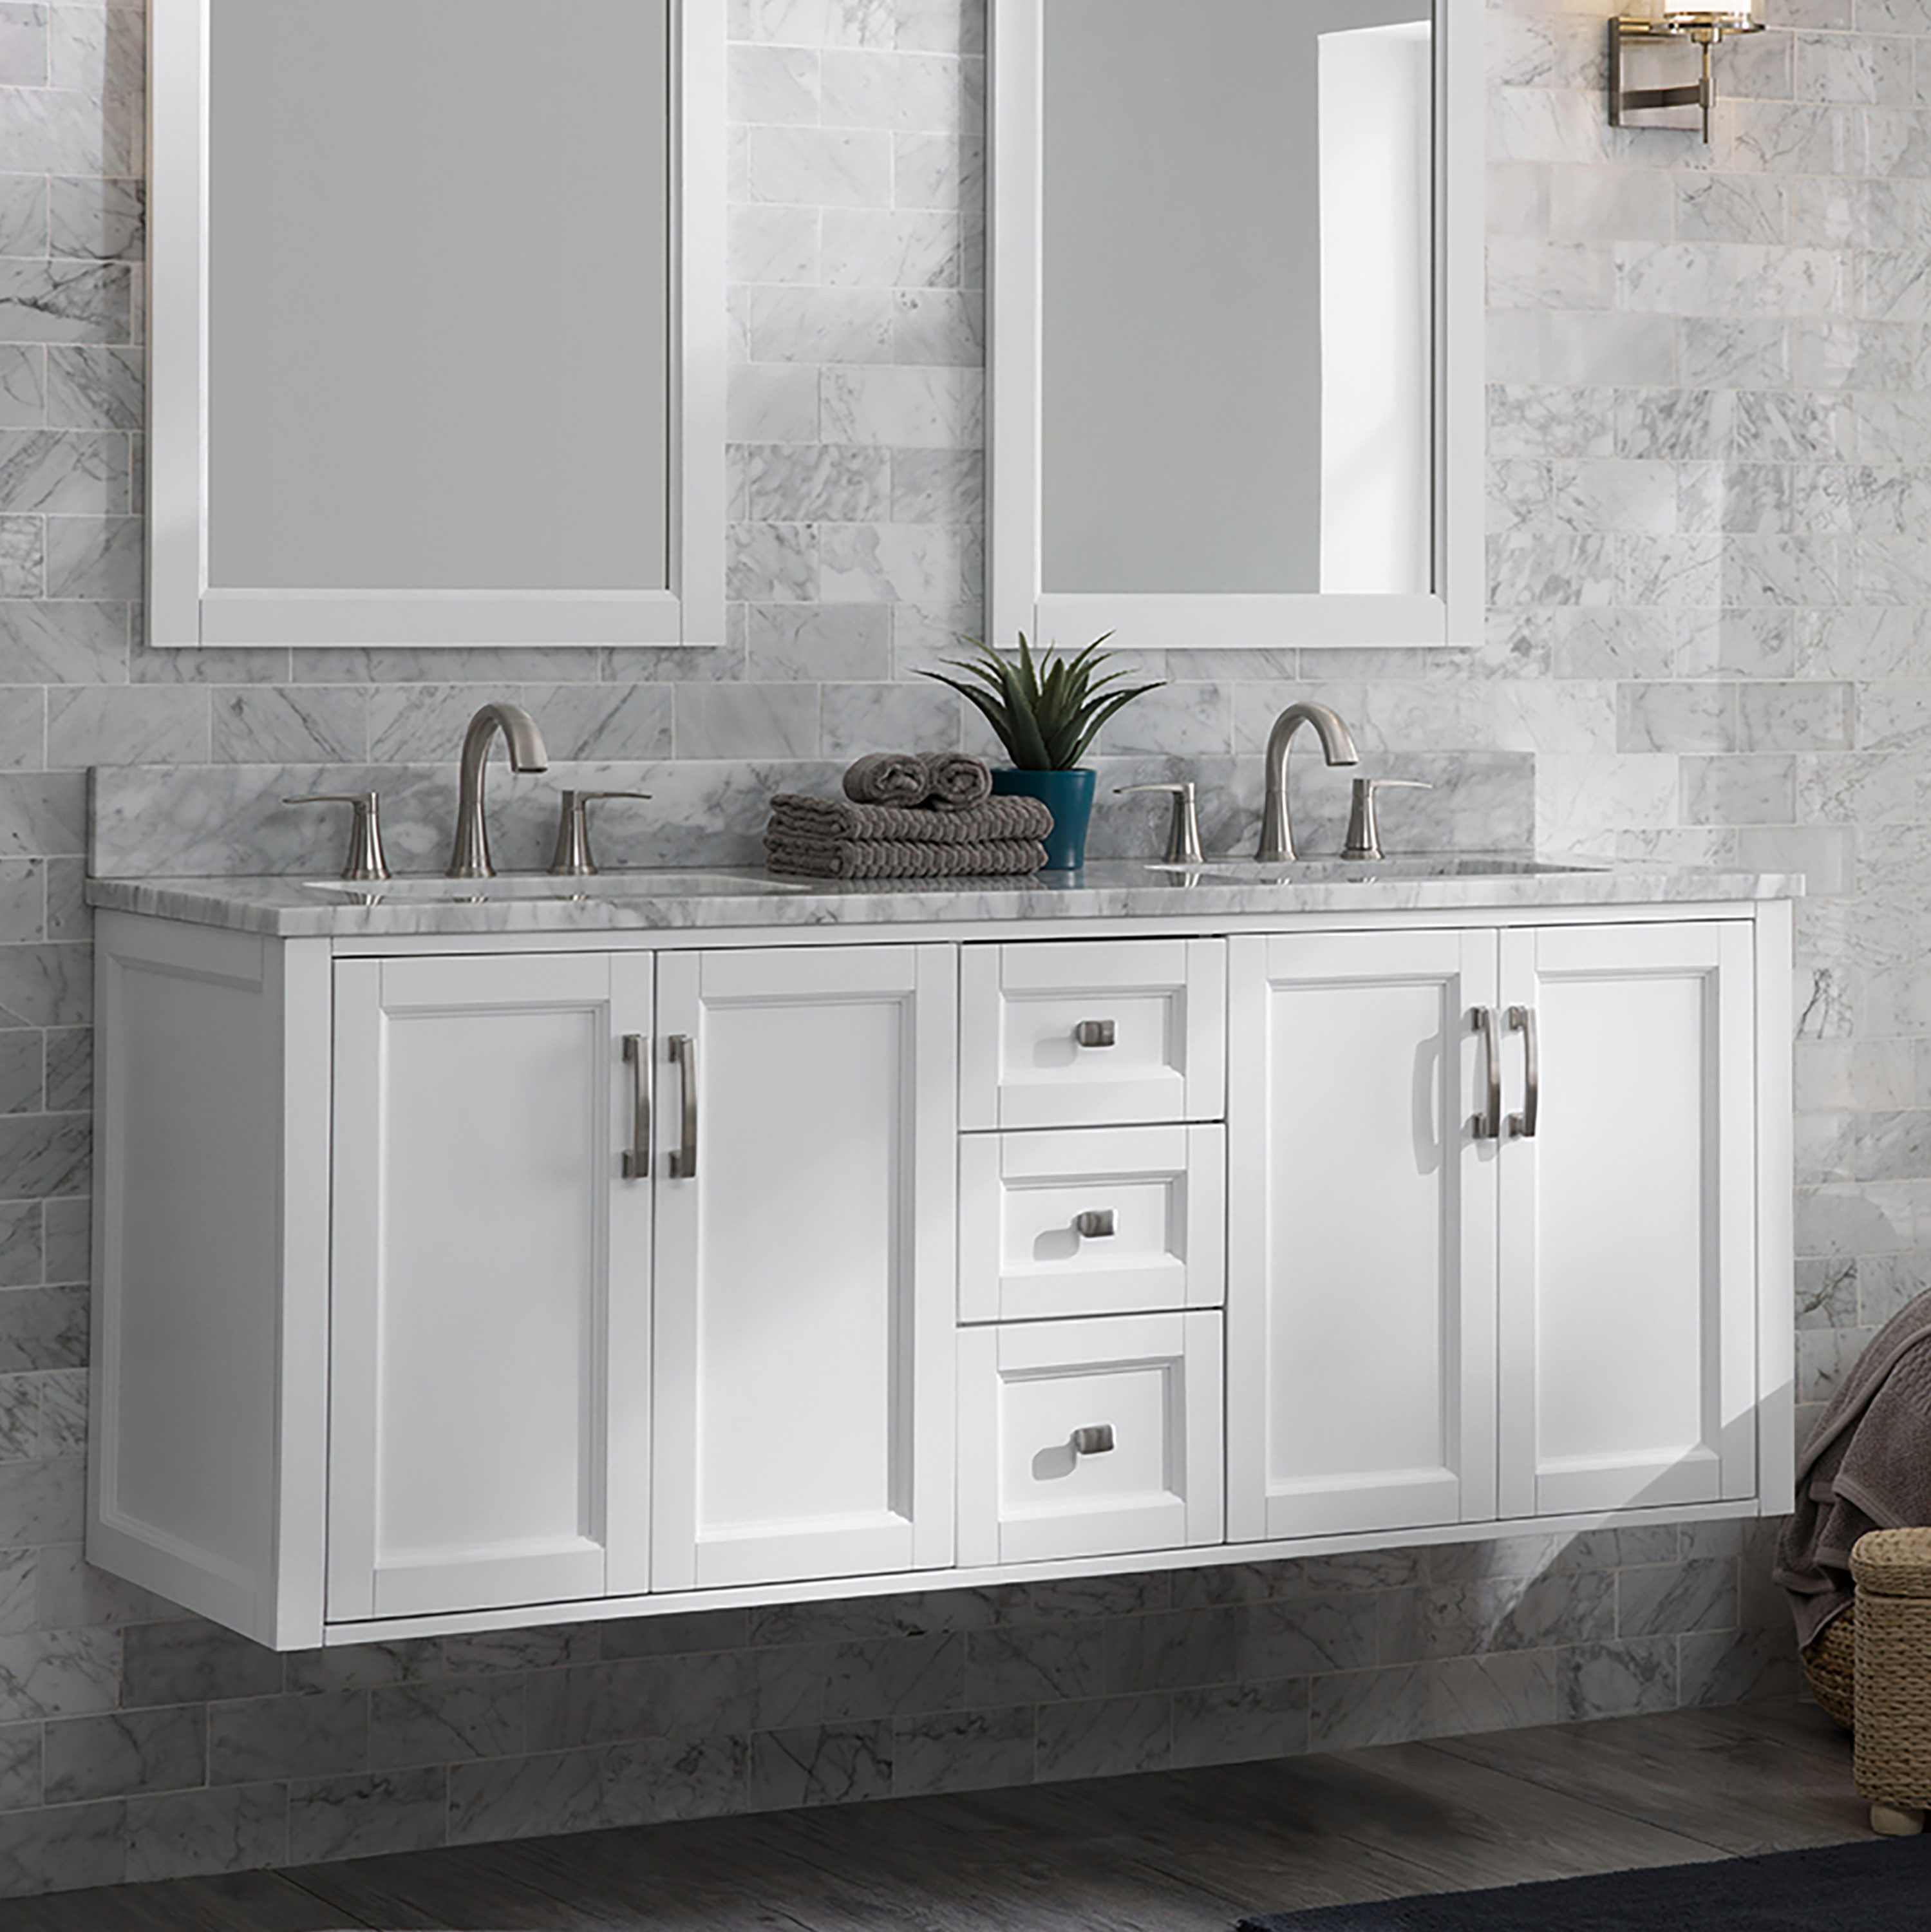 Double Sink Bathroom Vanity, Bathroom Vanities With Carrara Marble Tops